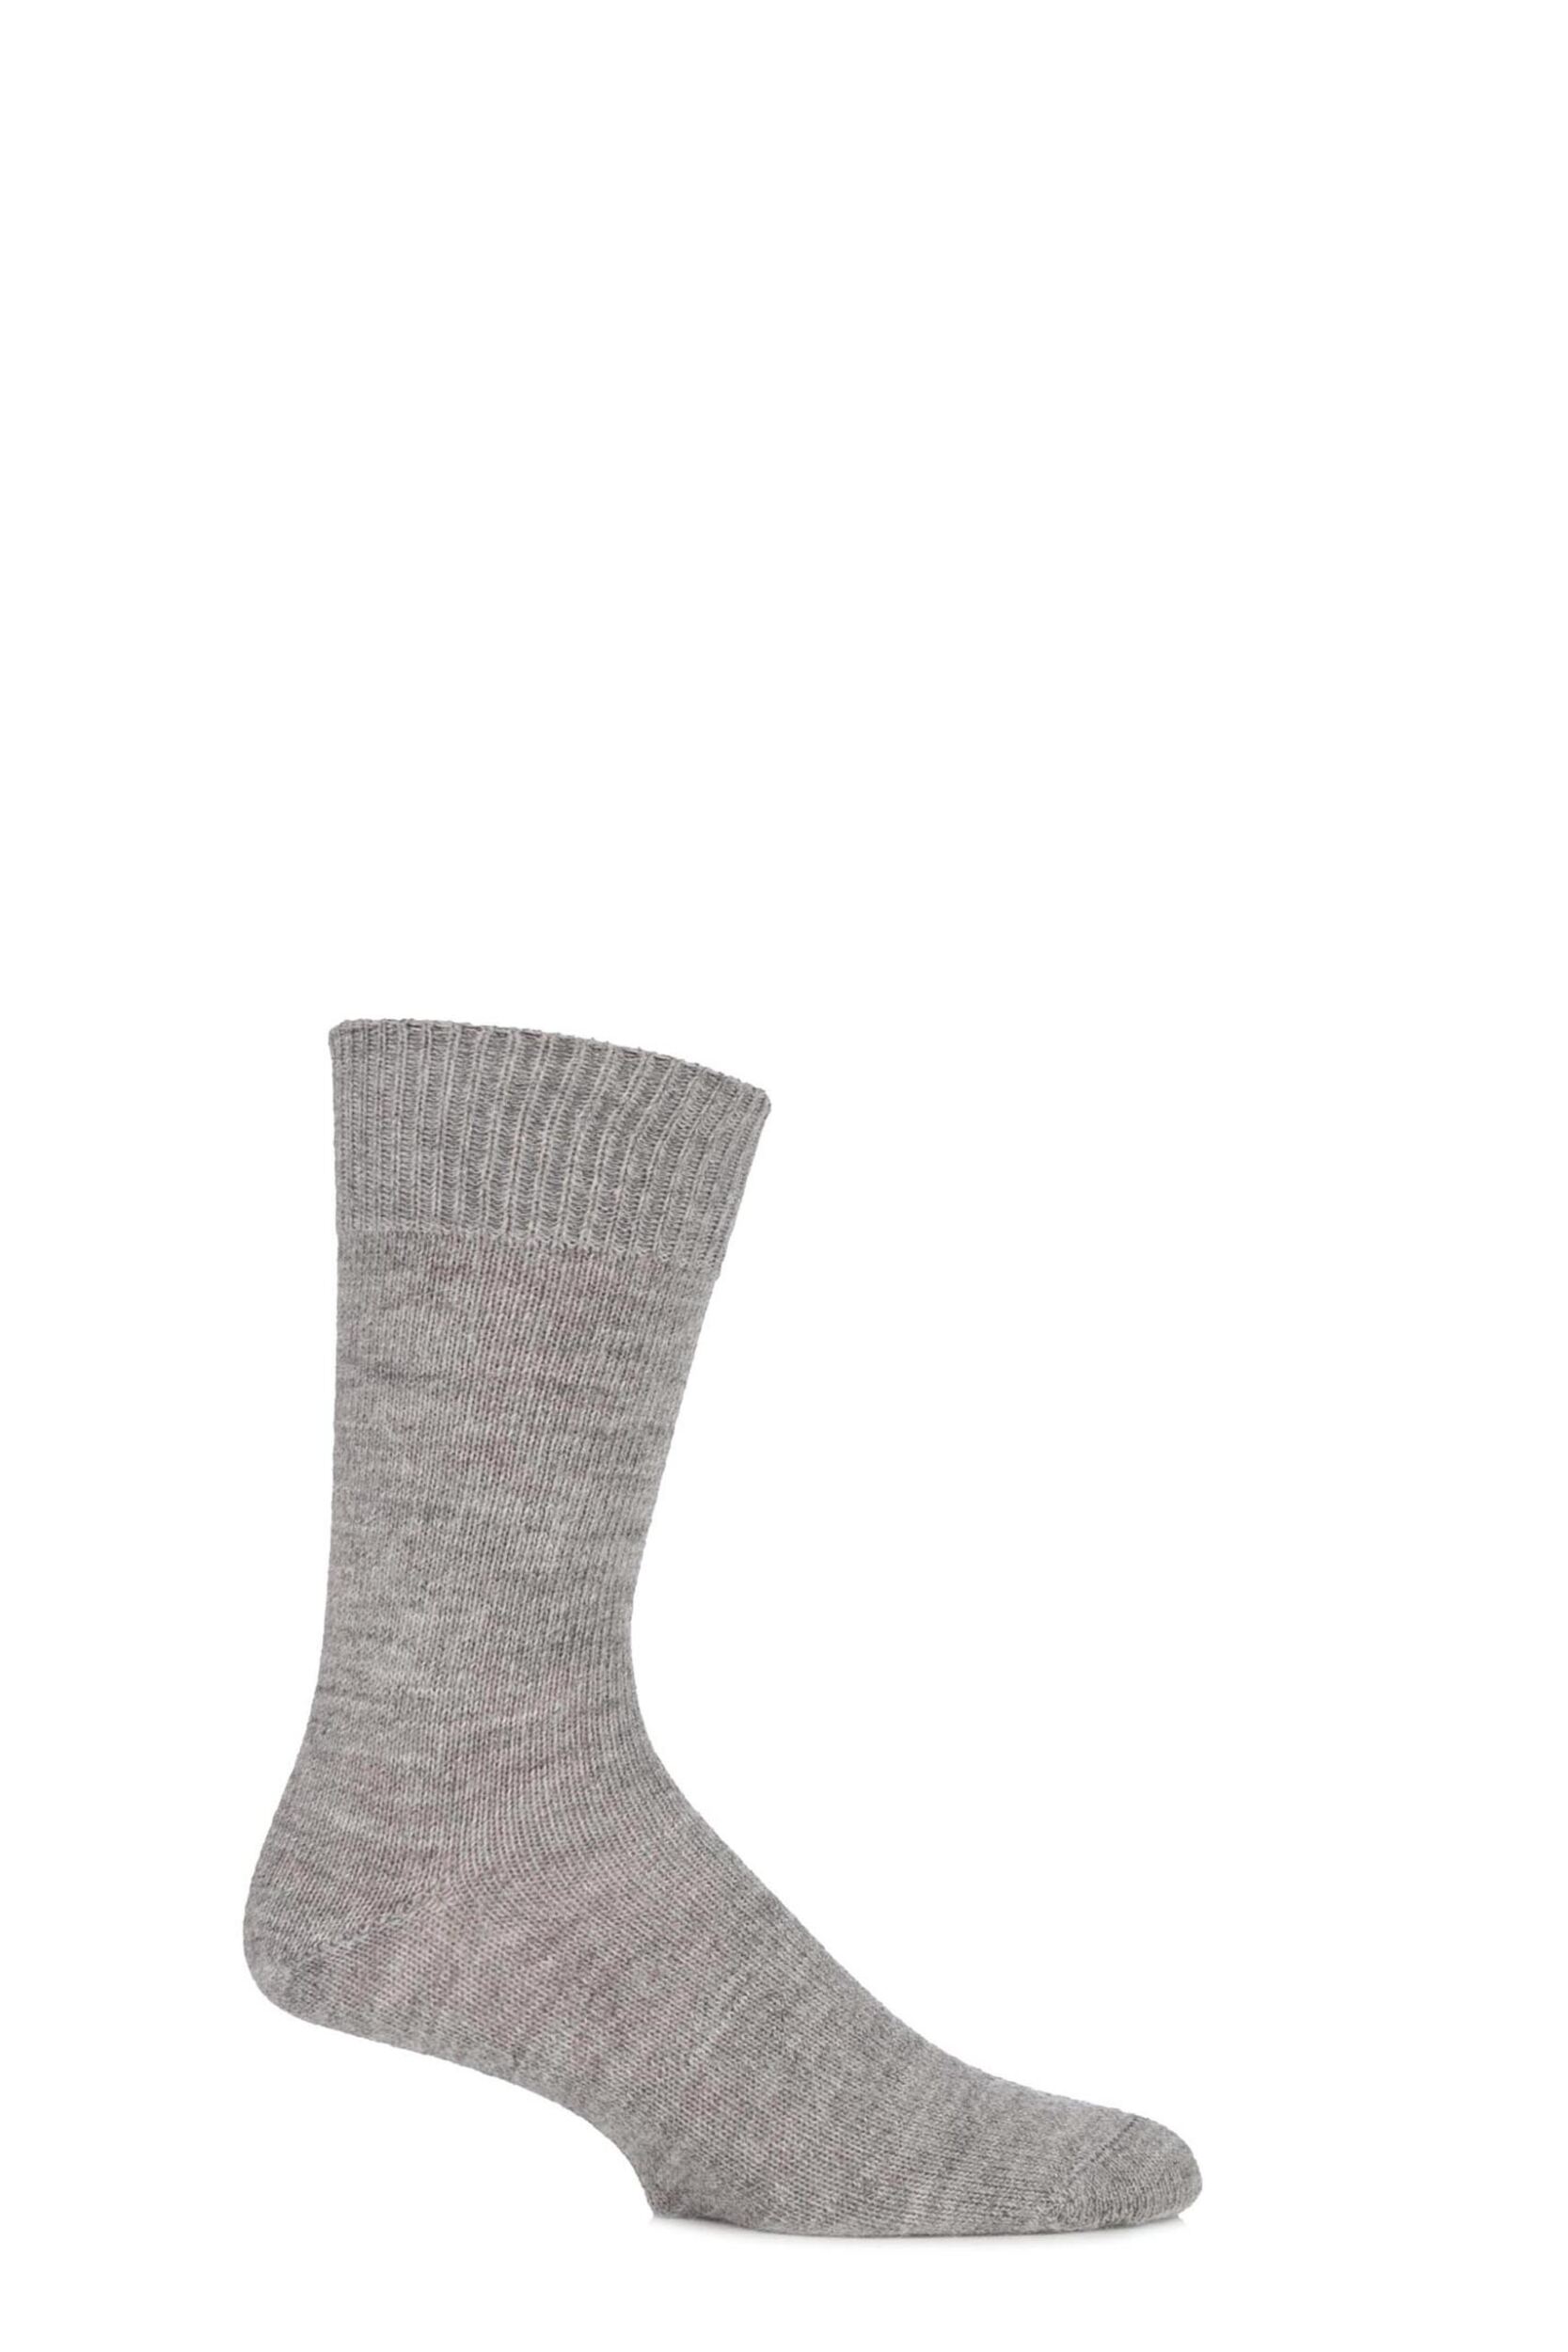 1 Pair Natural Grey of London Plain Alpaca Socks Unisex 8-10 Unisex - SOCKSHOP of London